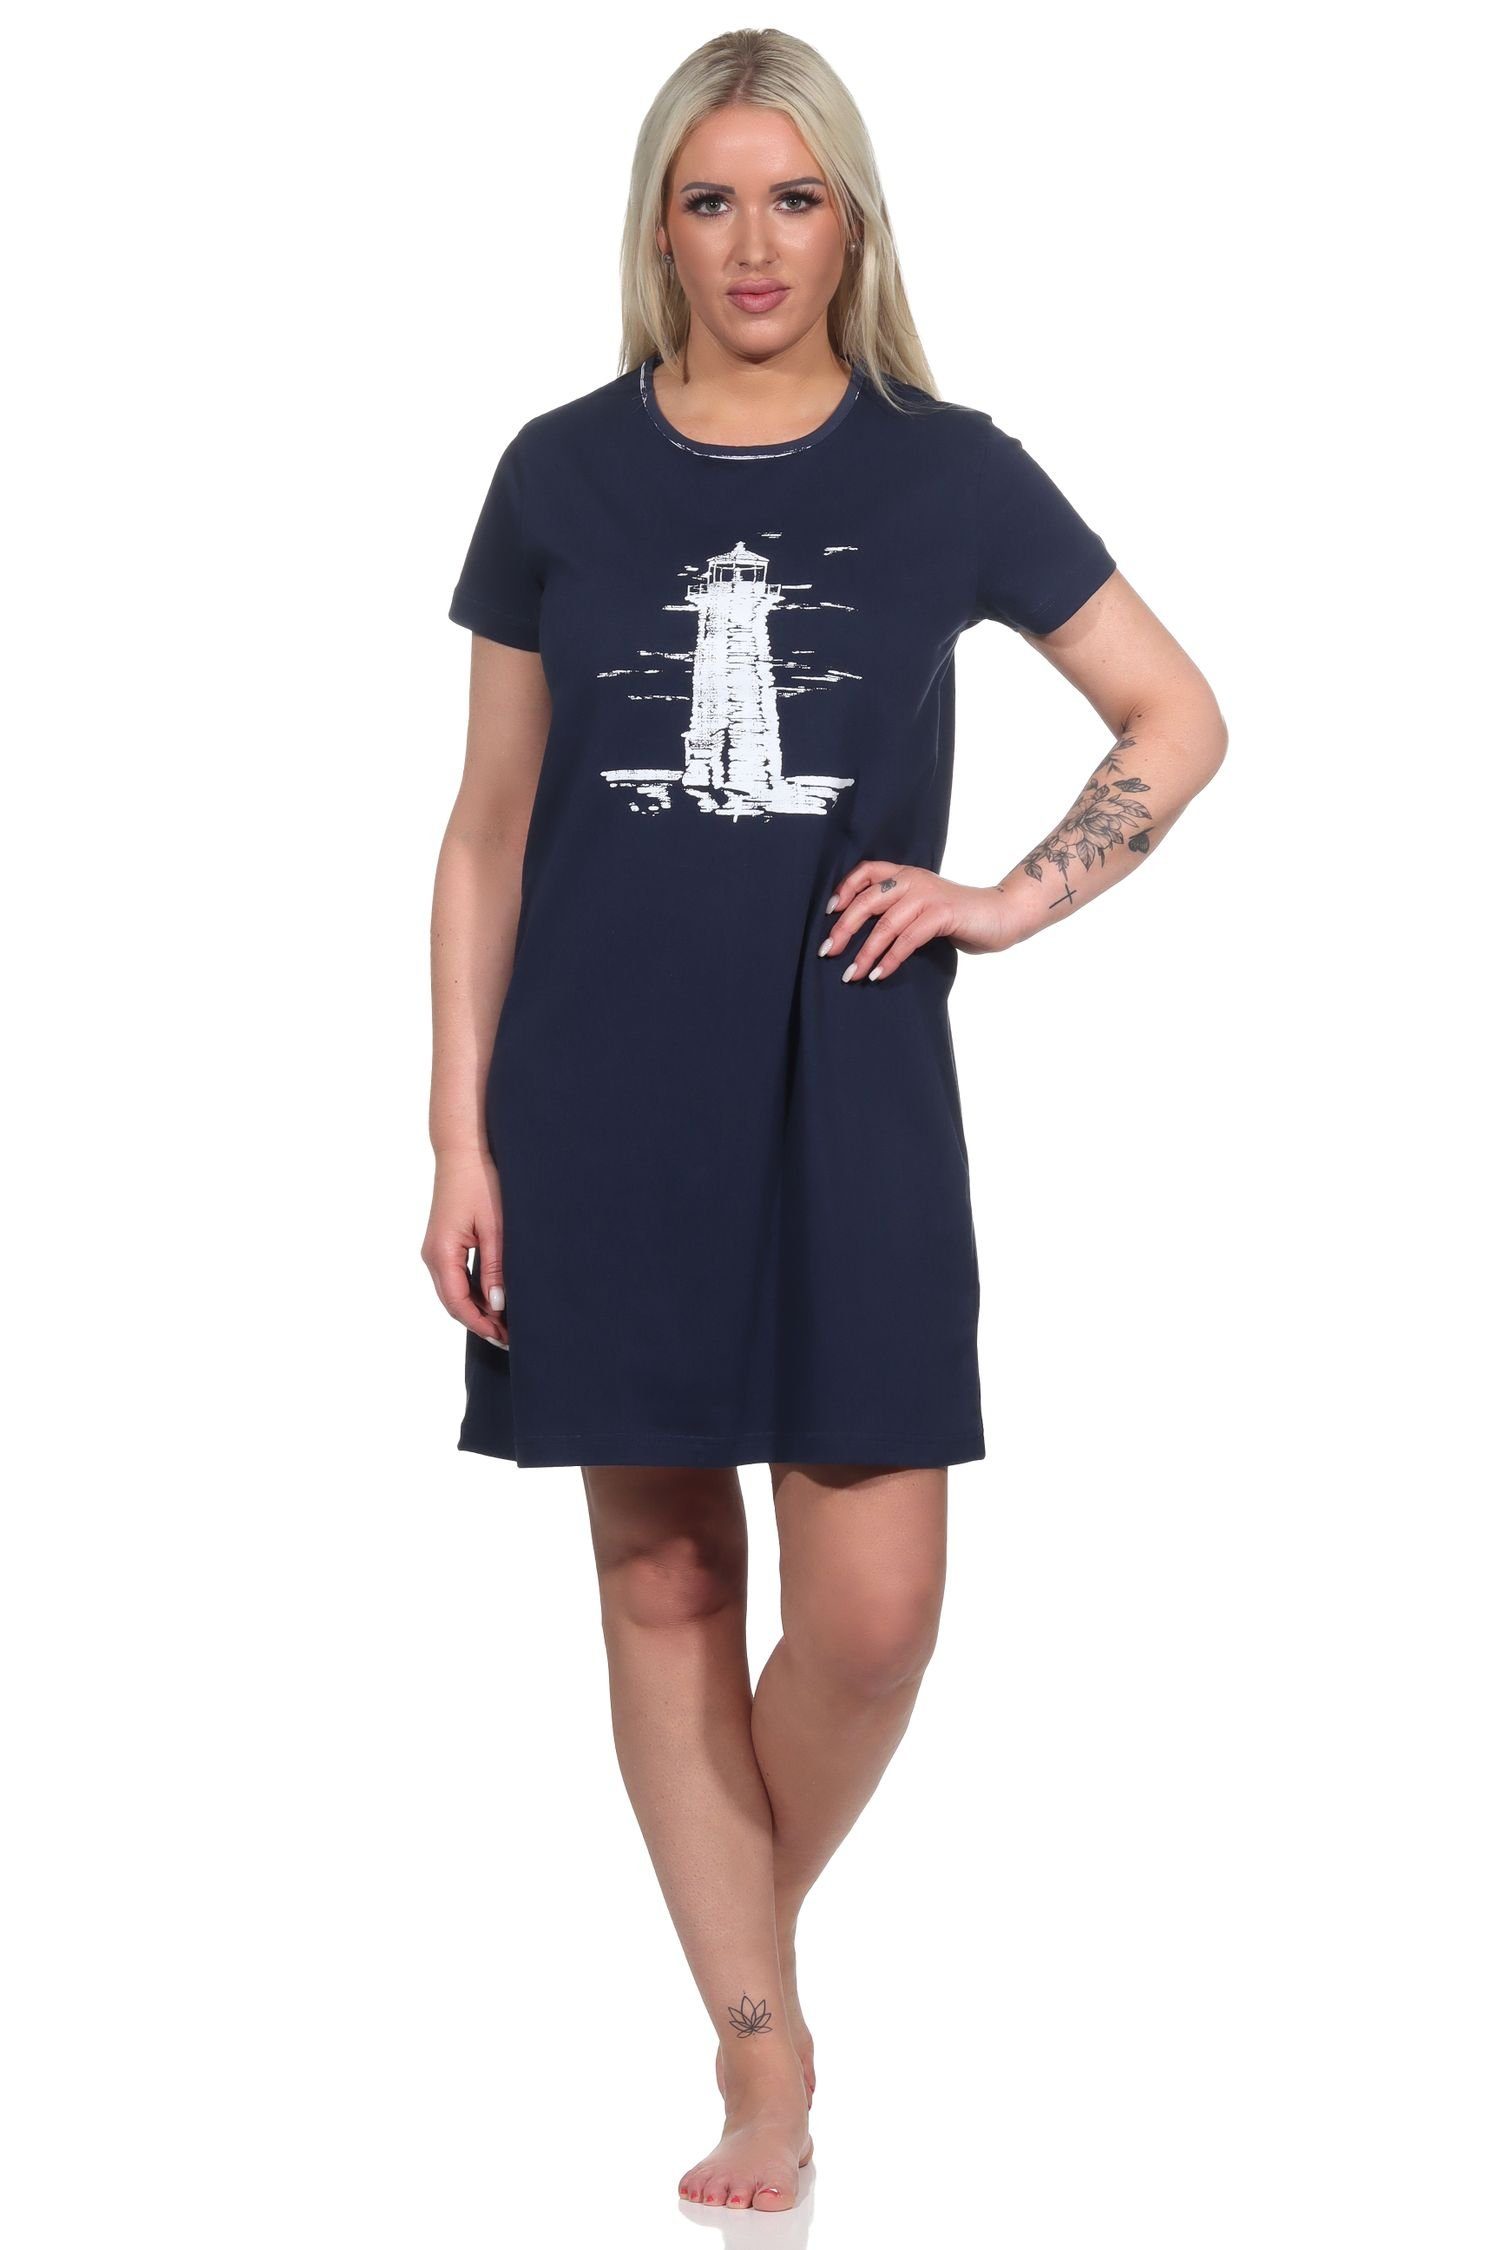 Normann Nachthemd Maritimes Damen kurzarm Nachthemd mit Leuchtturm Motiv marine